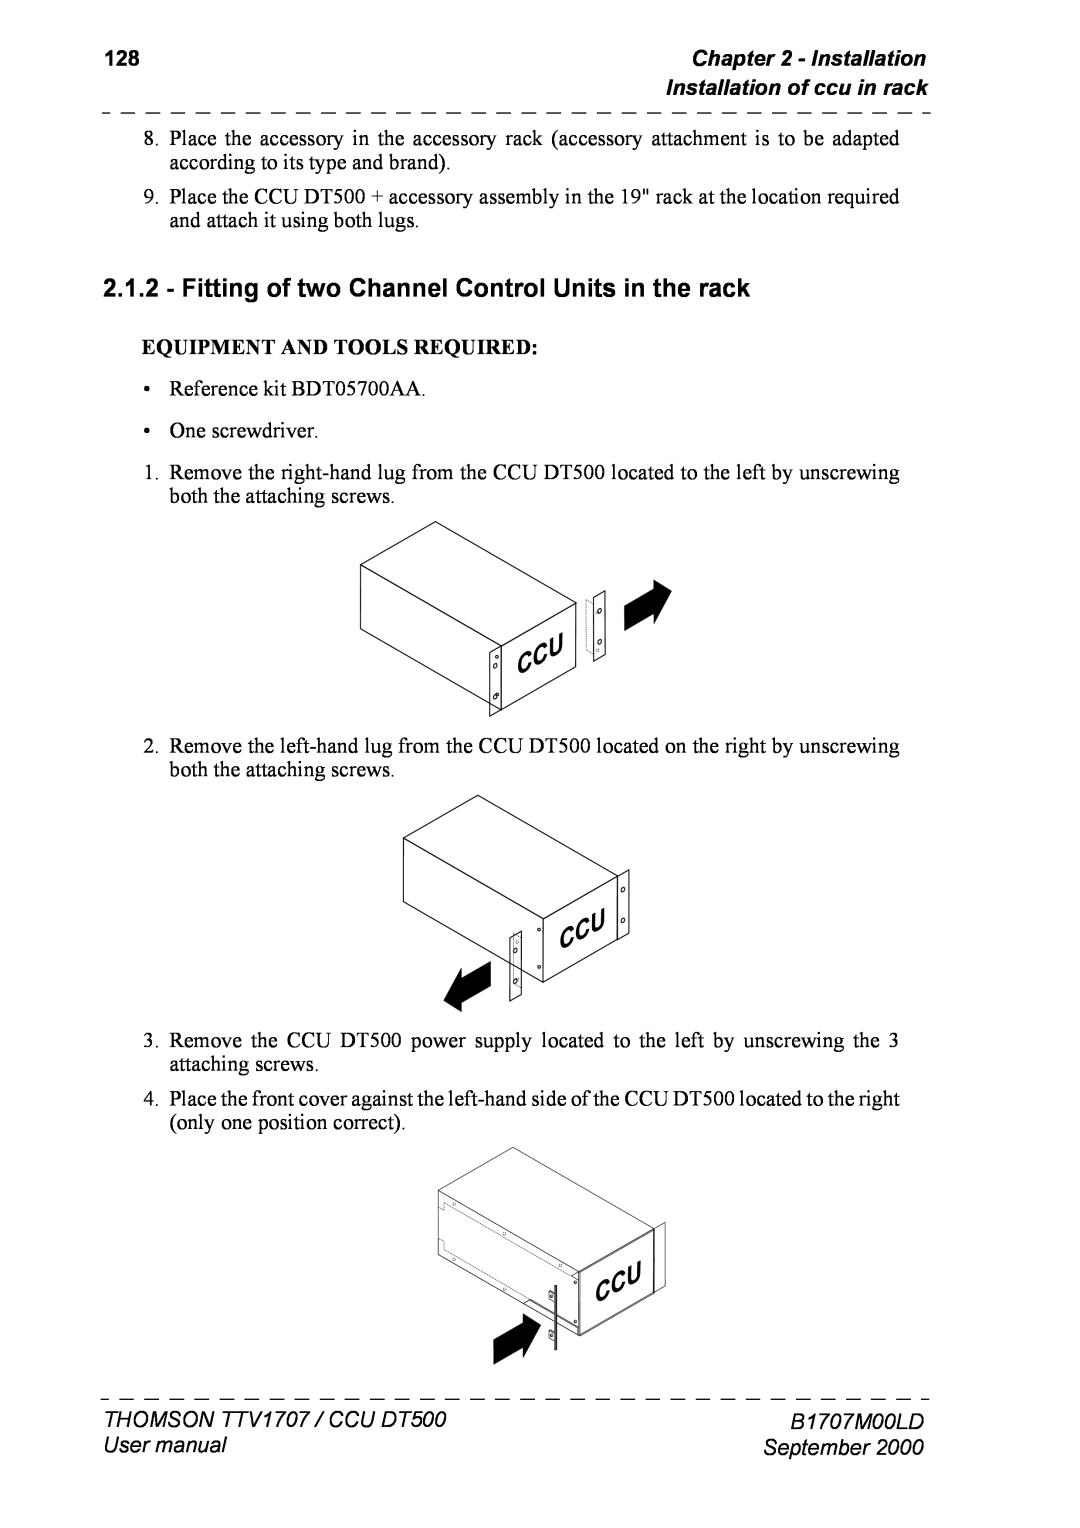 Technicolor - Thomson CCU DT 500 Installation of ccu in rack, THOMSON TTV1707 / CCU DT500, B1707M00LD, User manual 